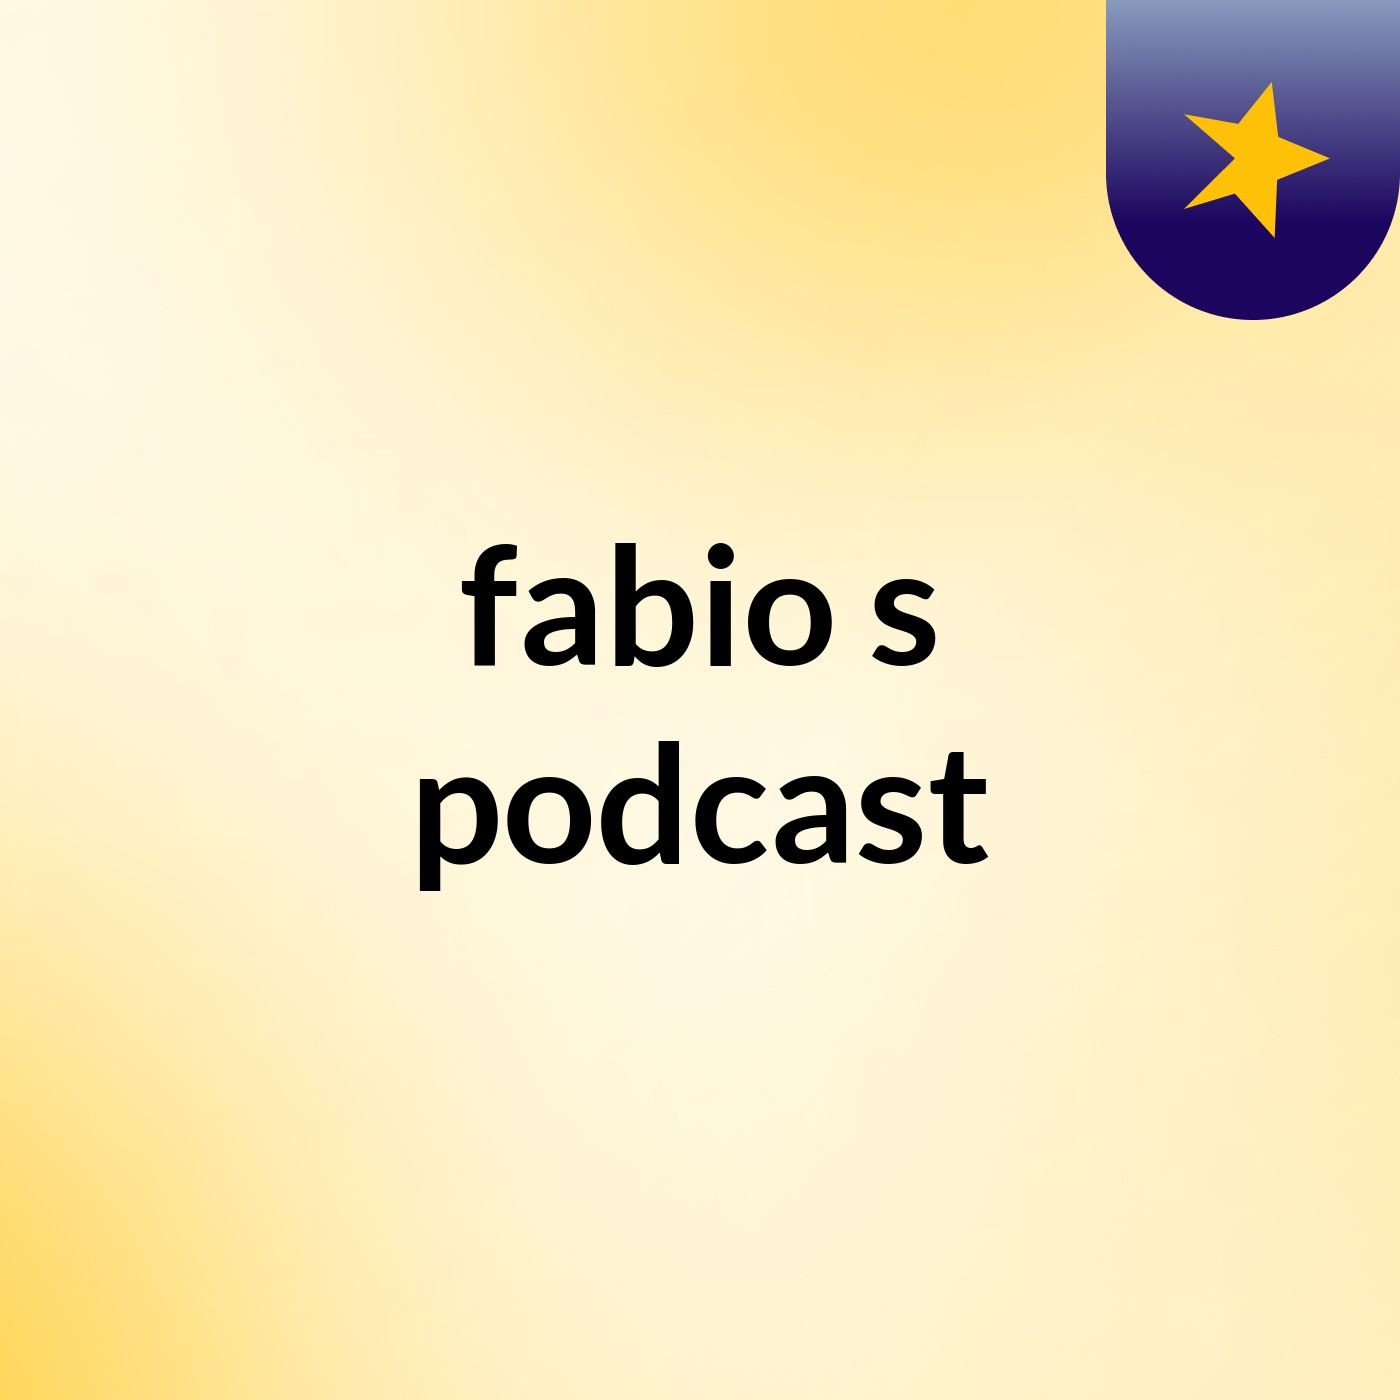 fabio's podcast